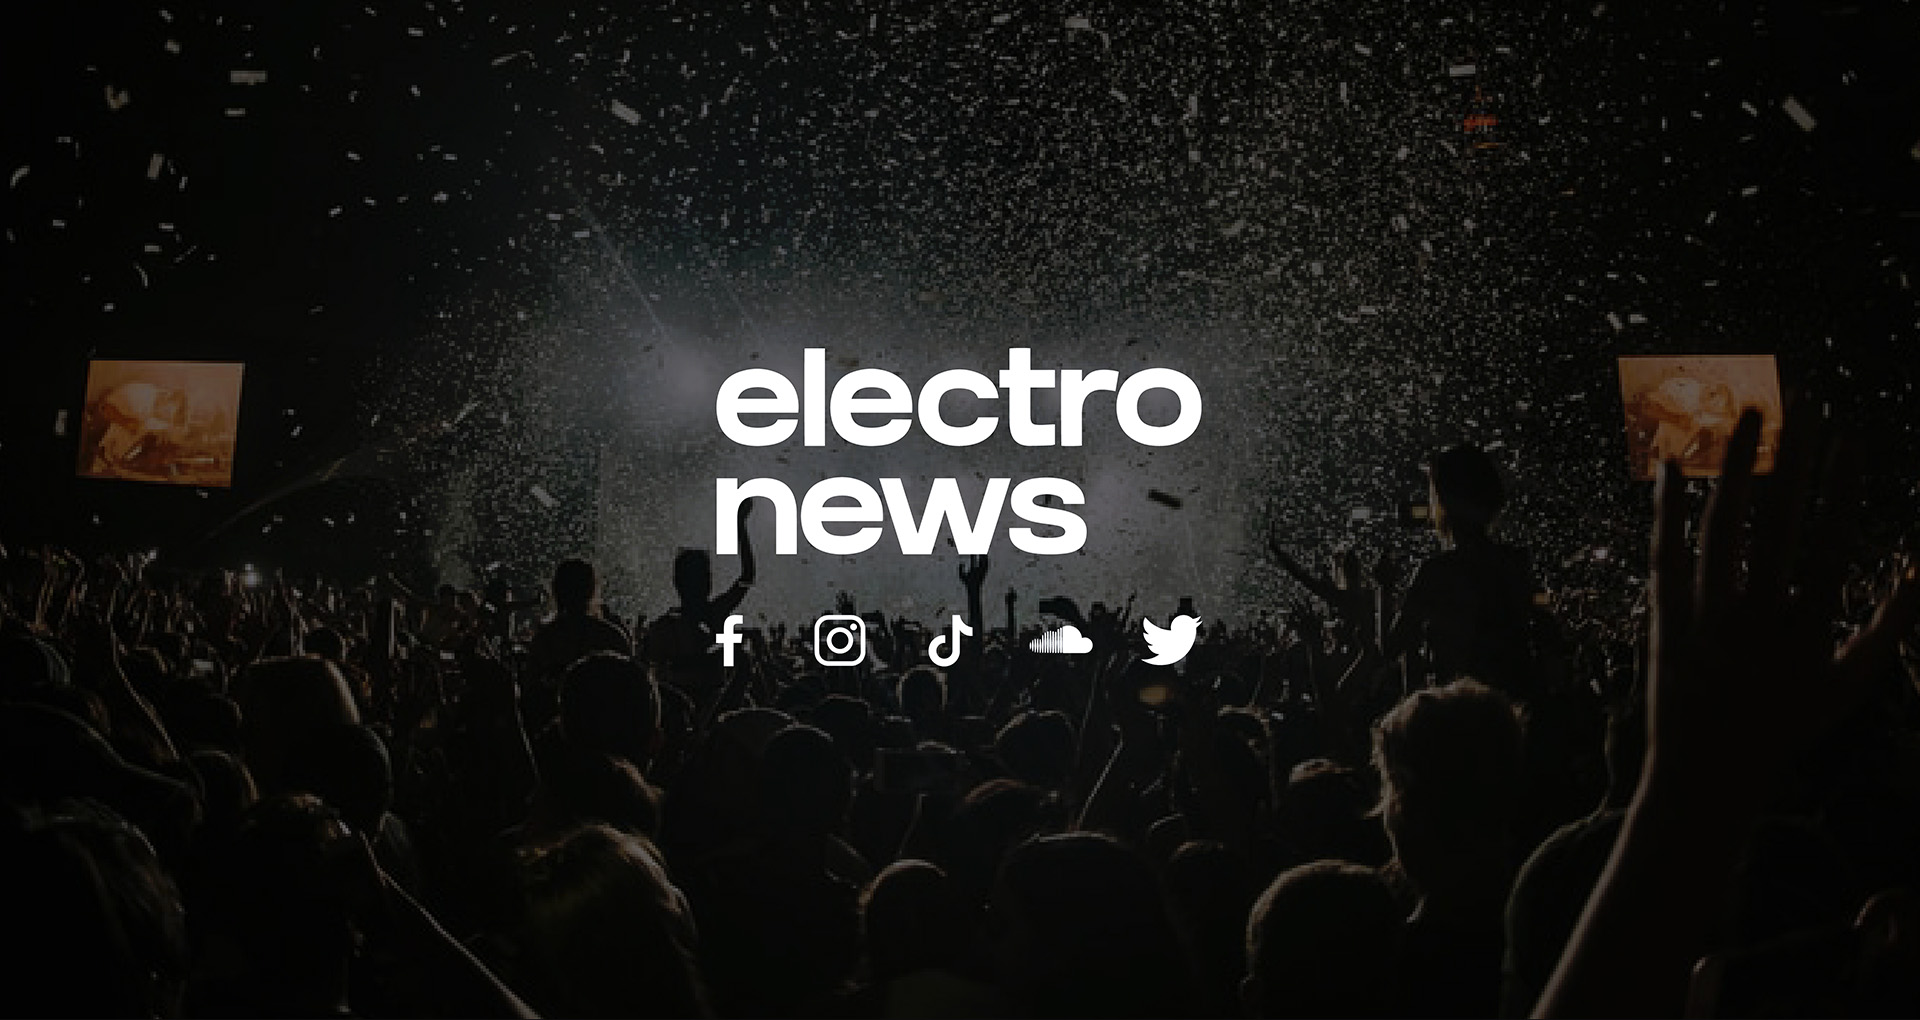 (c) Electro-news.eu